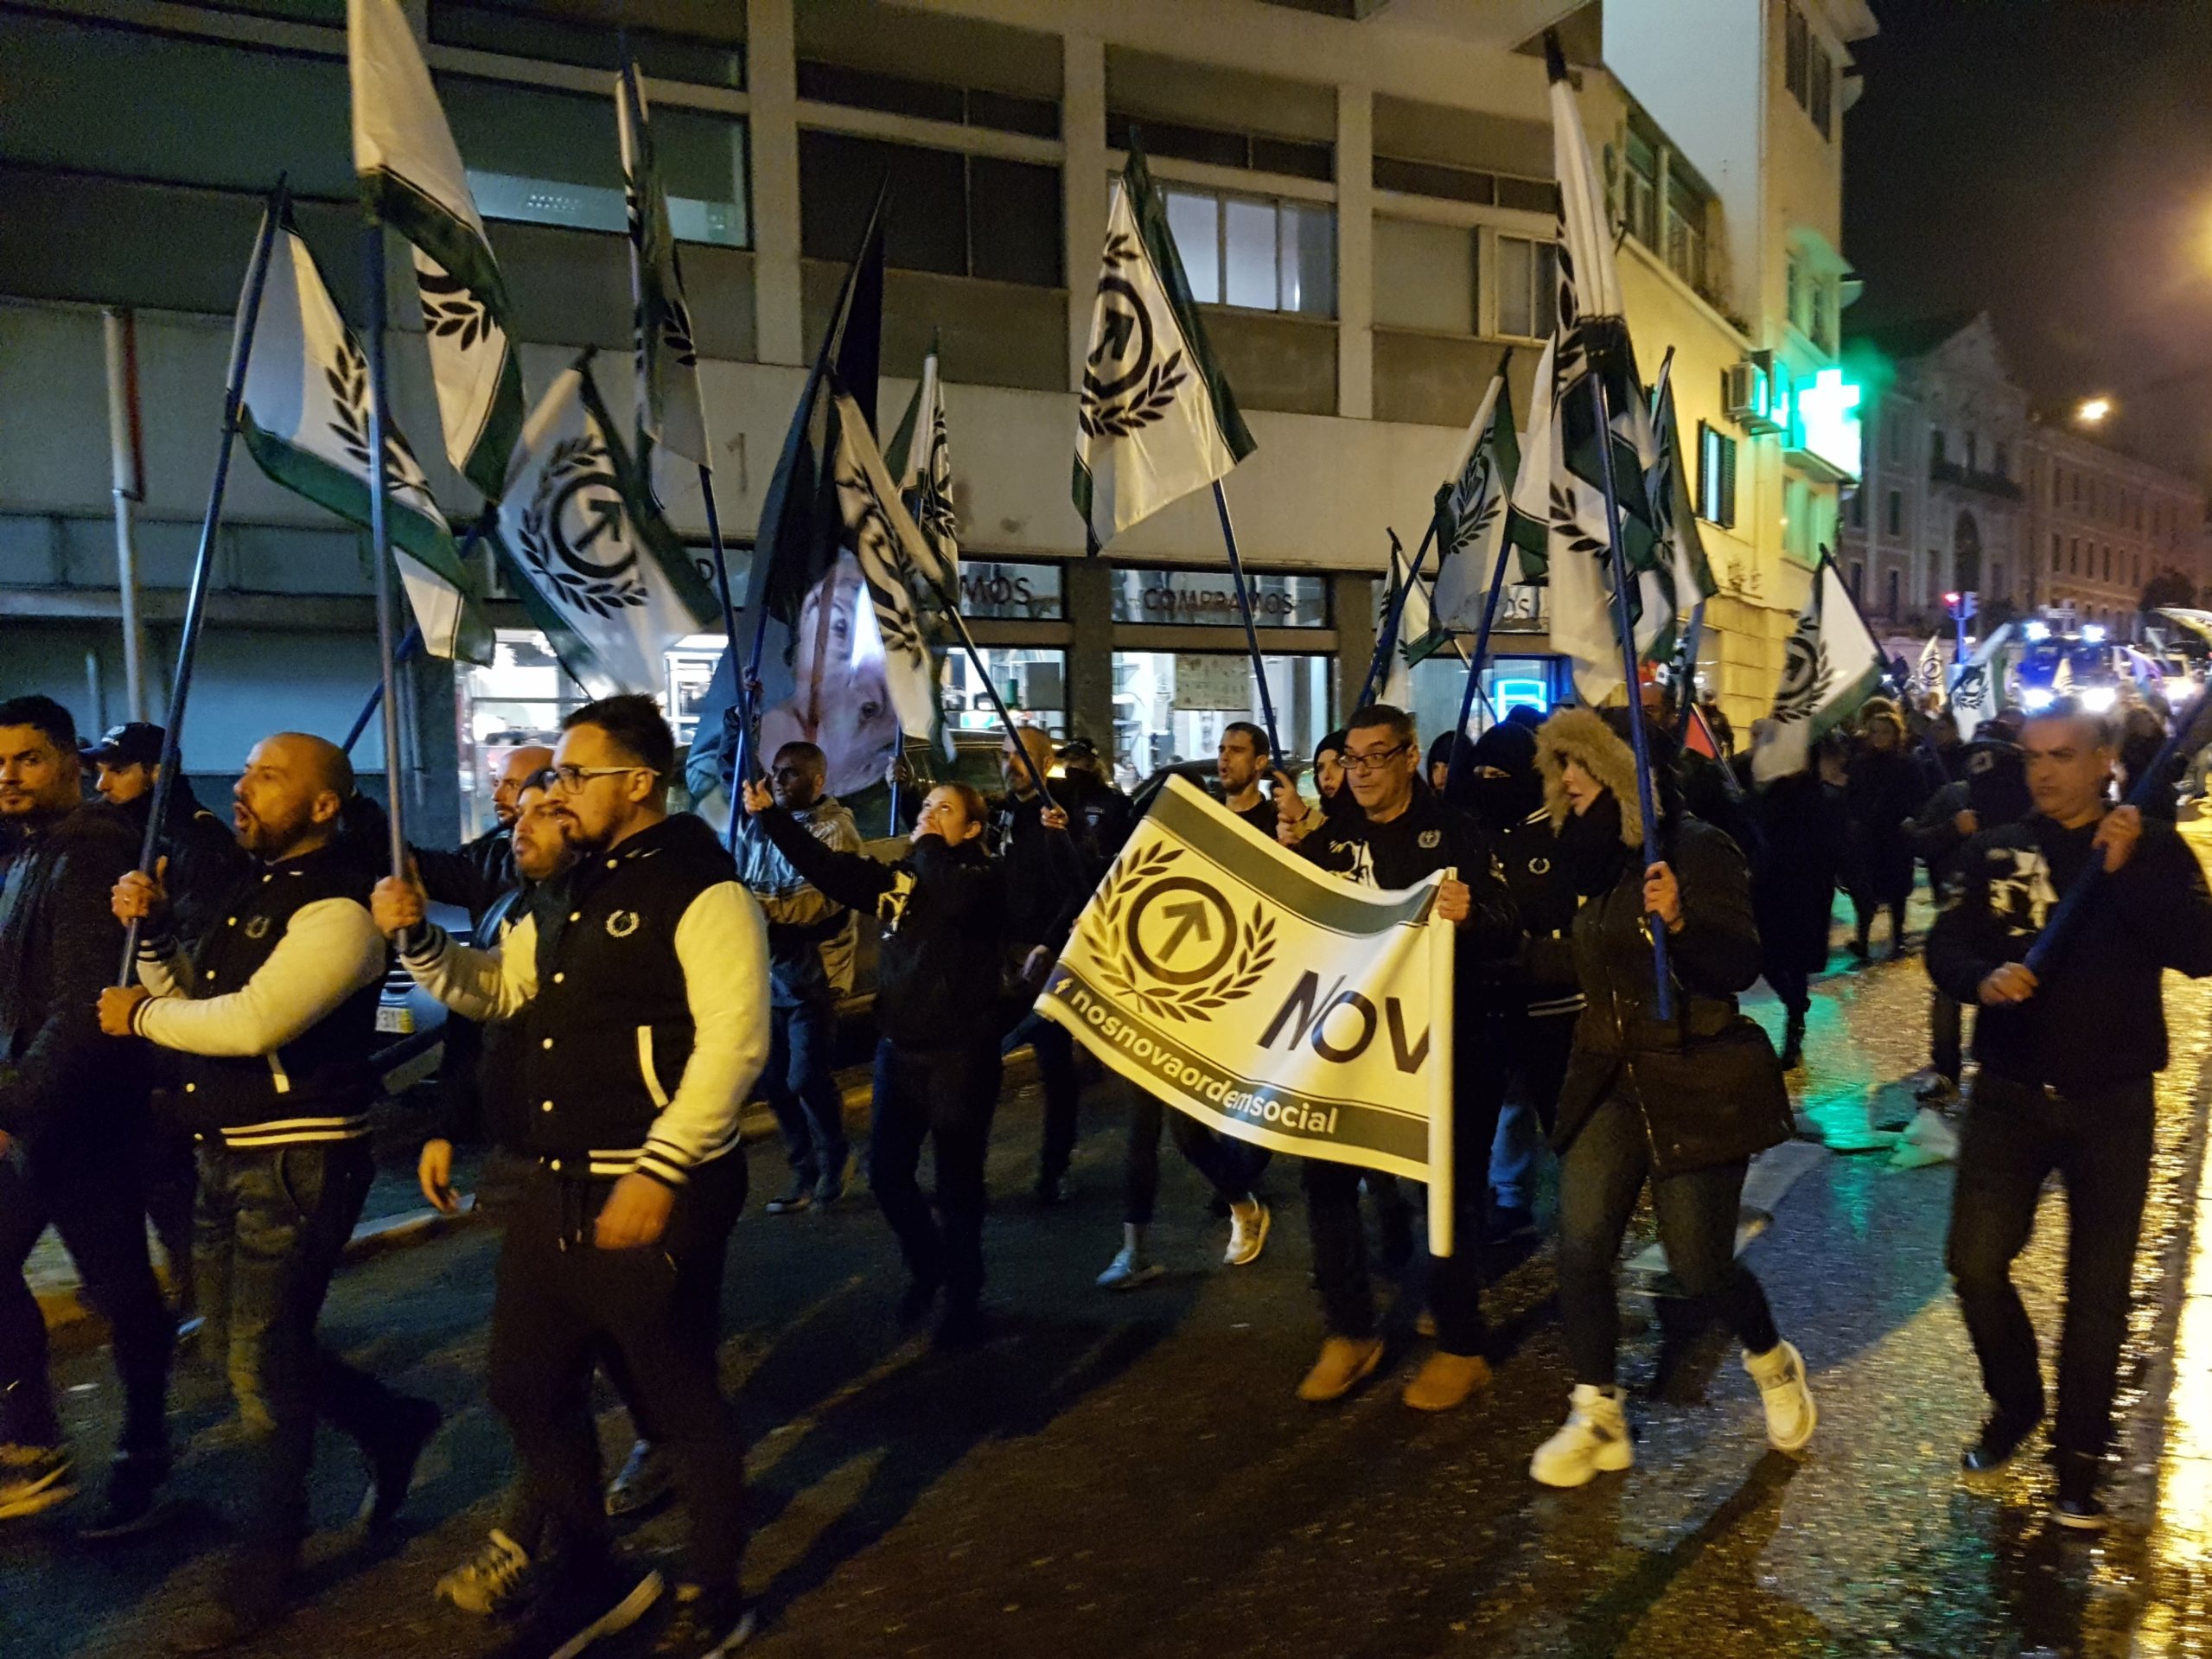 salazar - 200 nacionalistas marcham por Salazar em Lisboa (fotos) - Página 2 20190222